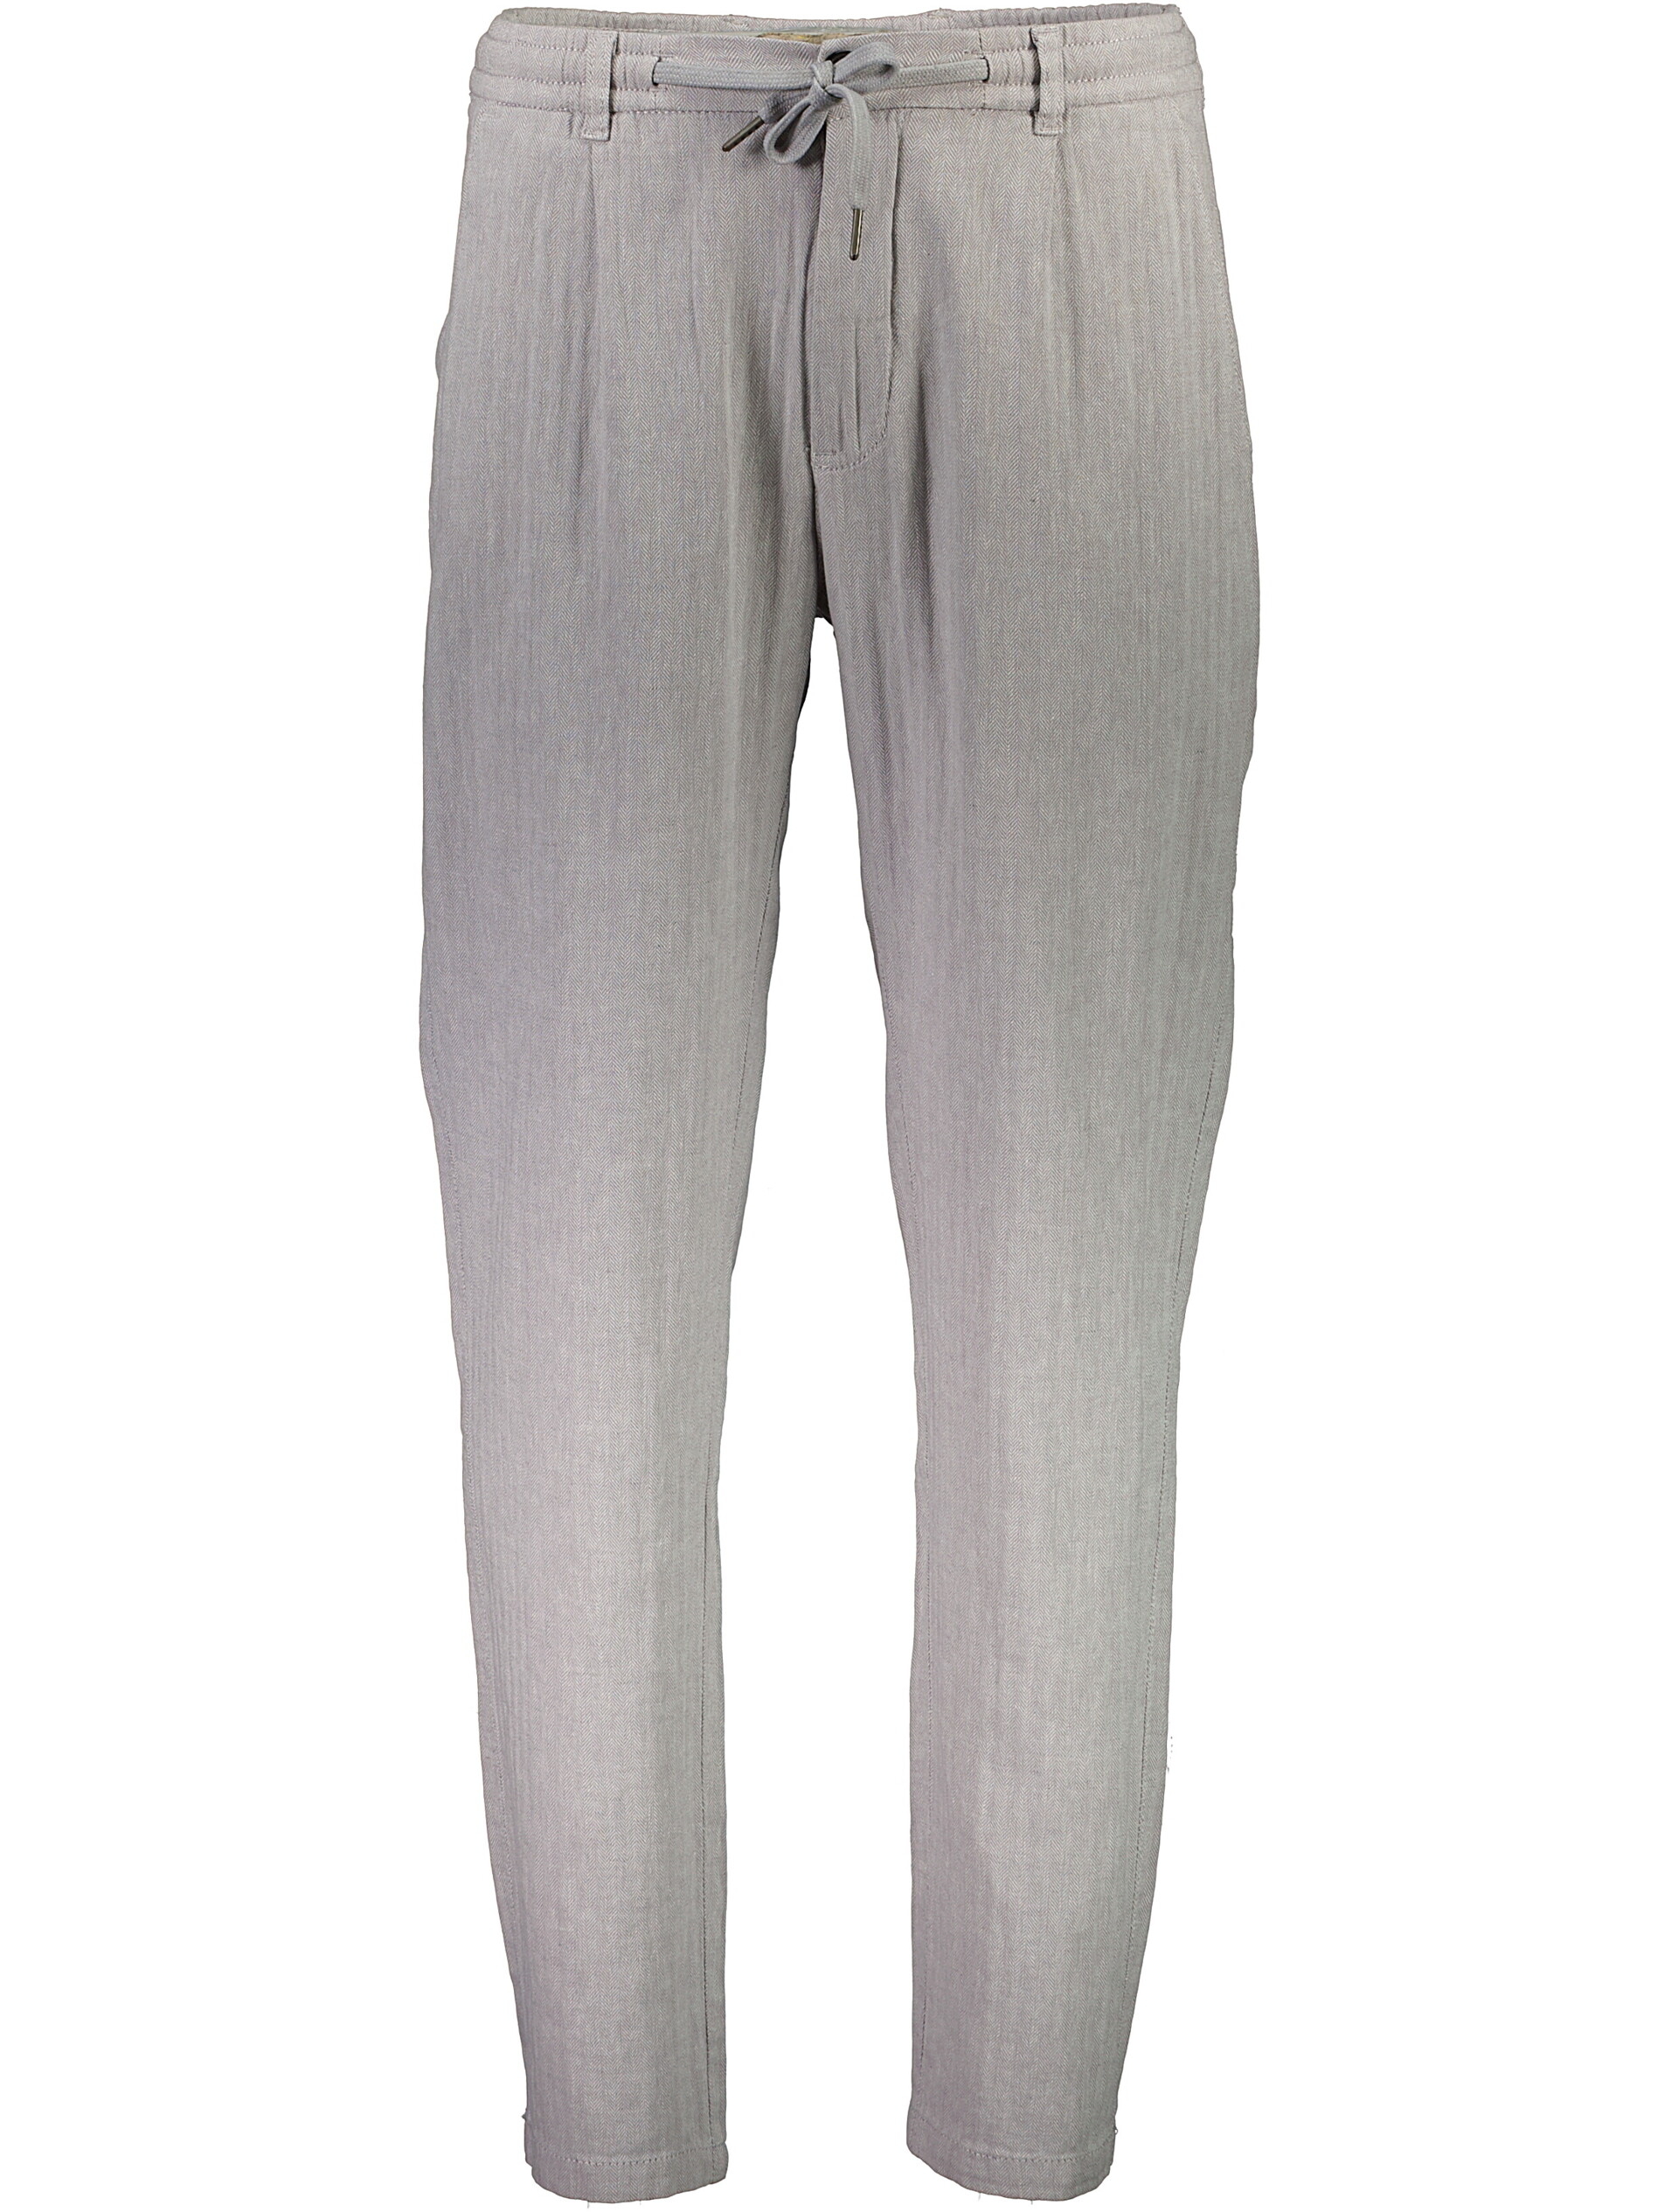 Lindbergh Linen pants grey / grey mel